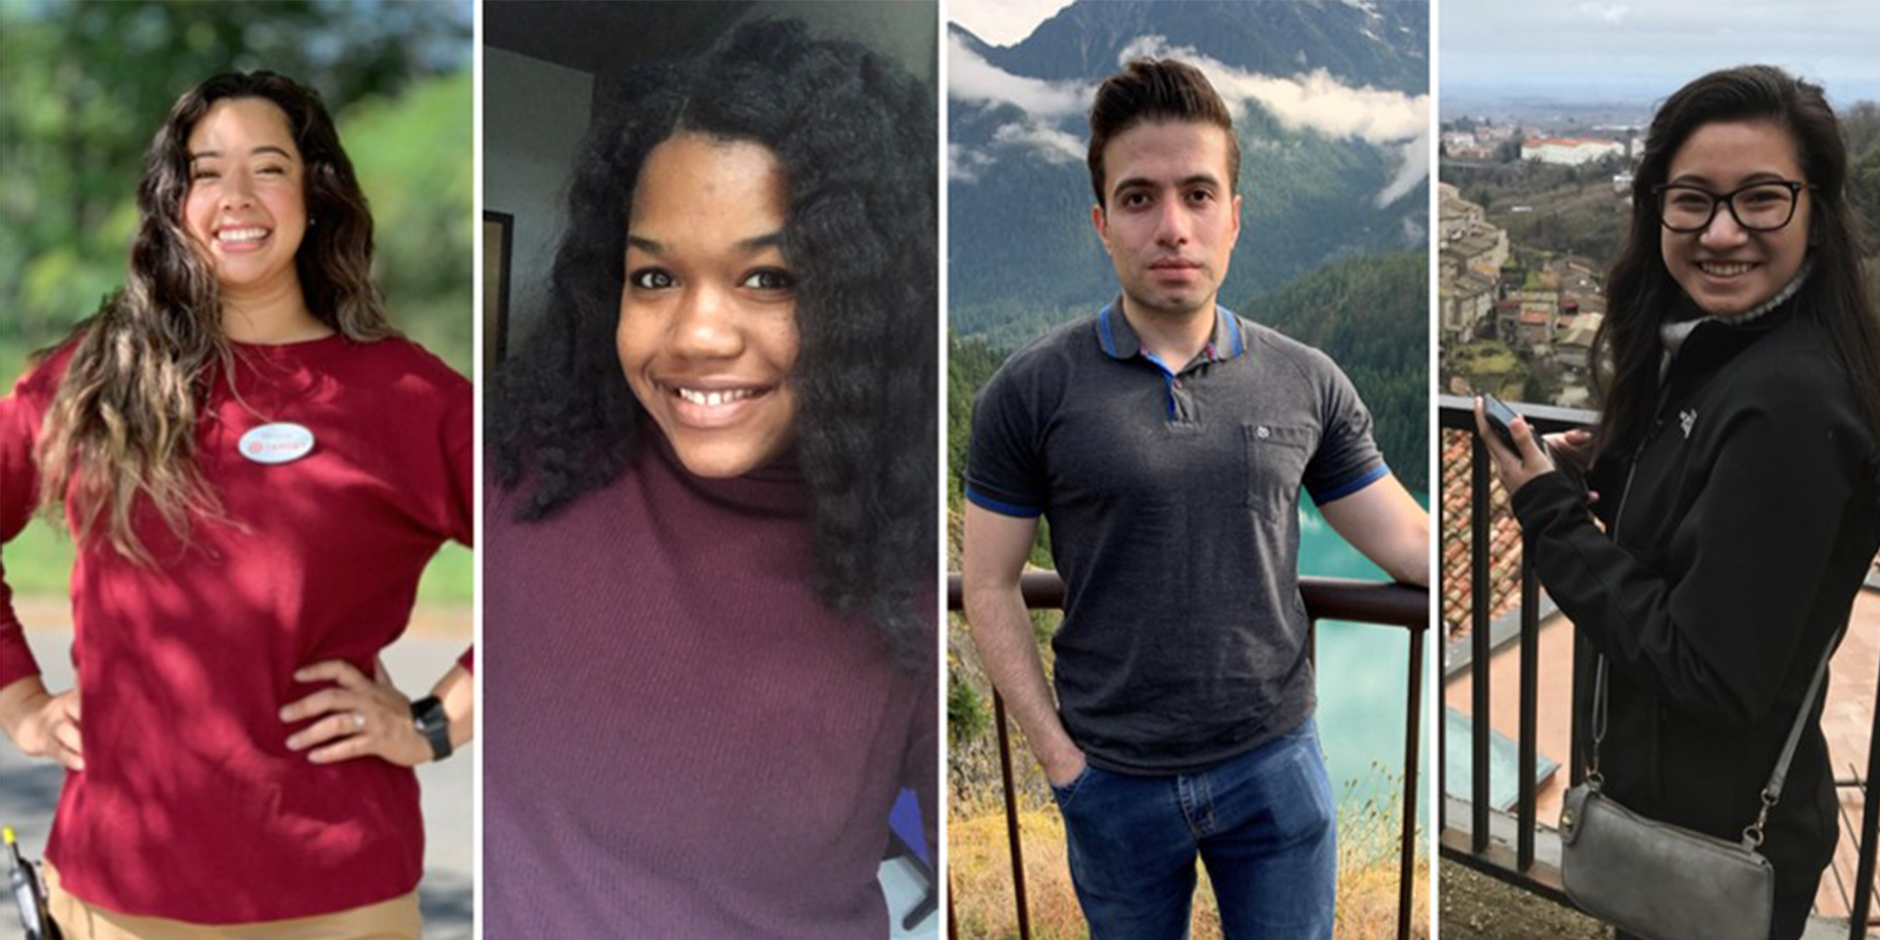 "Photos of four of Target's interns"